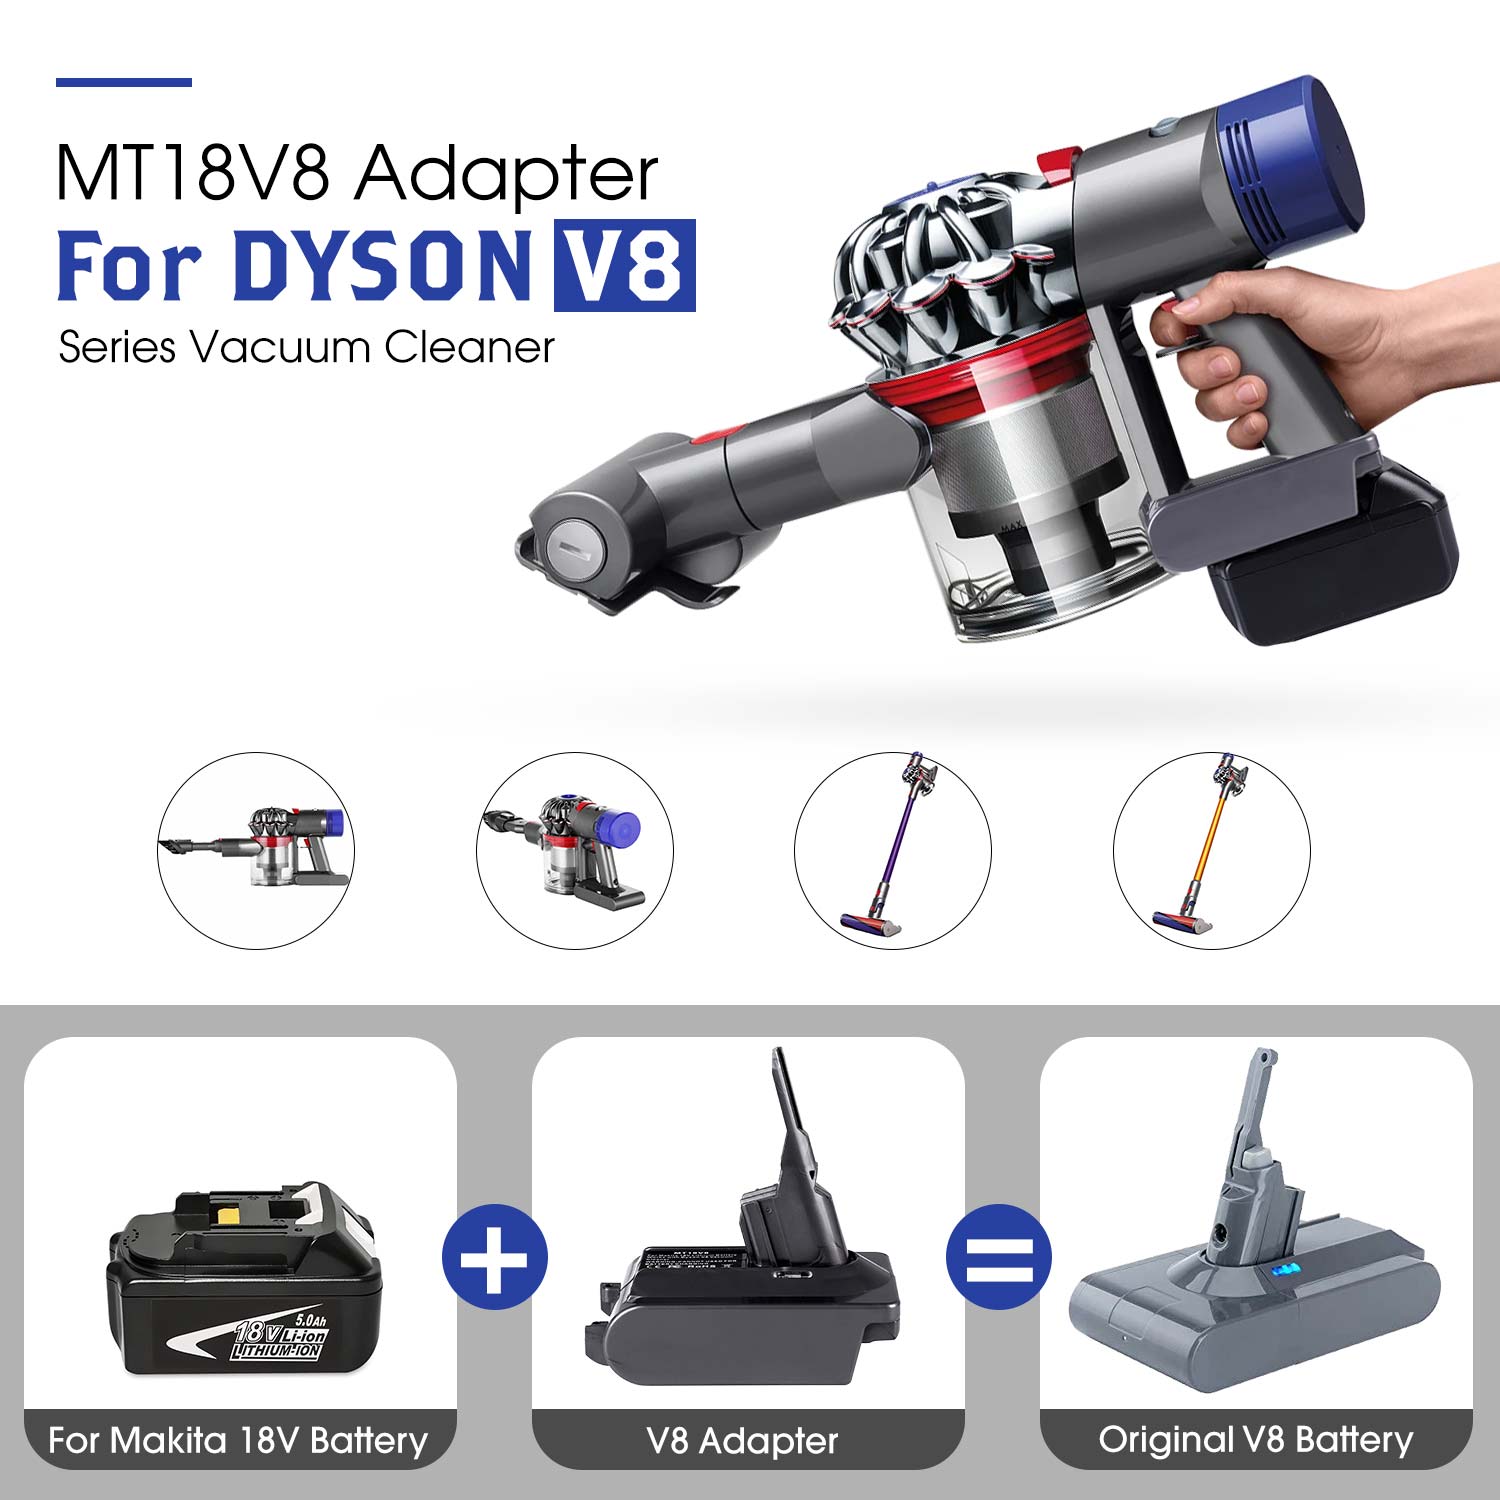 Adaptador de bateria Dyason V8 per a bateria de liti Makita 18V convertida a bateria Dyson V8